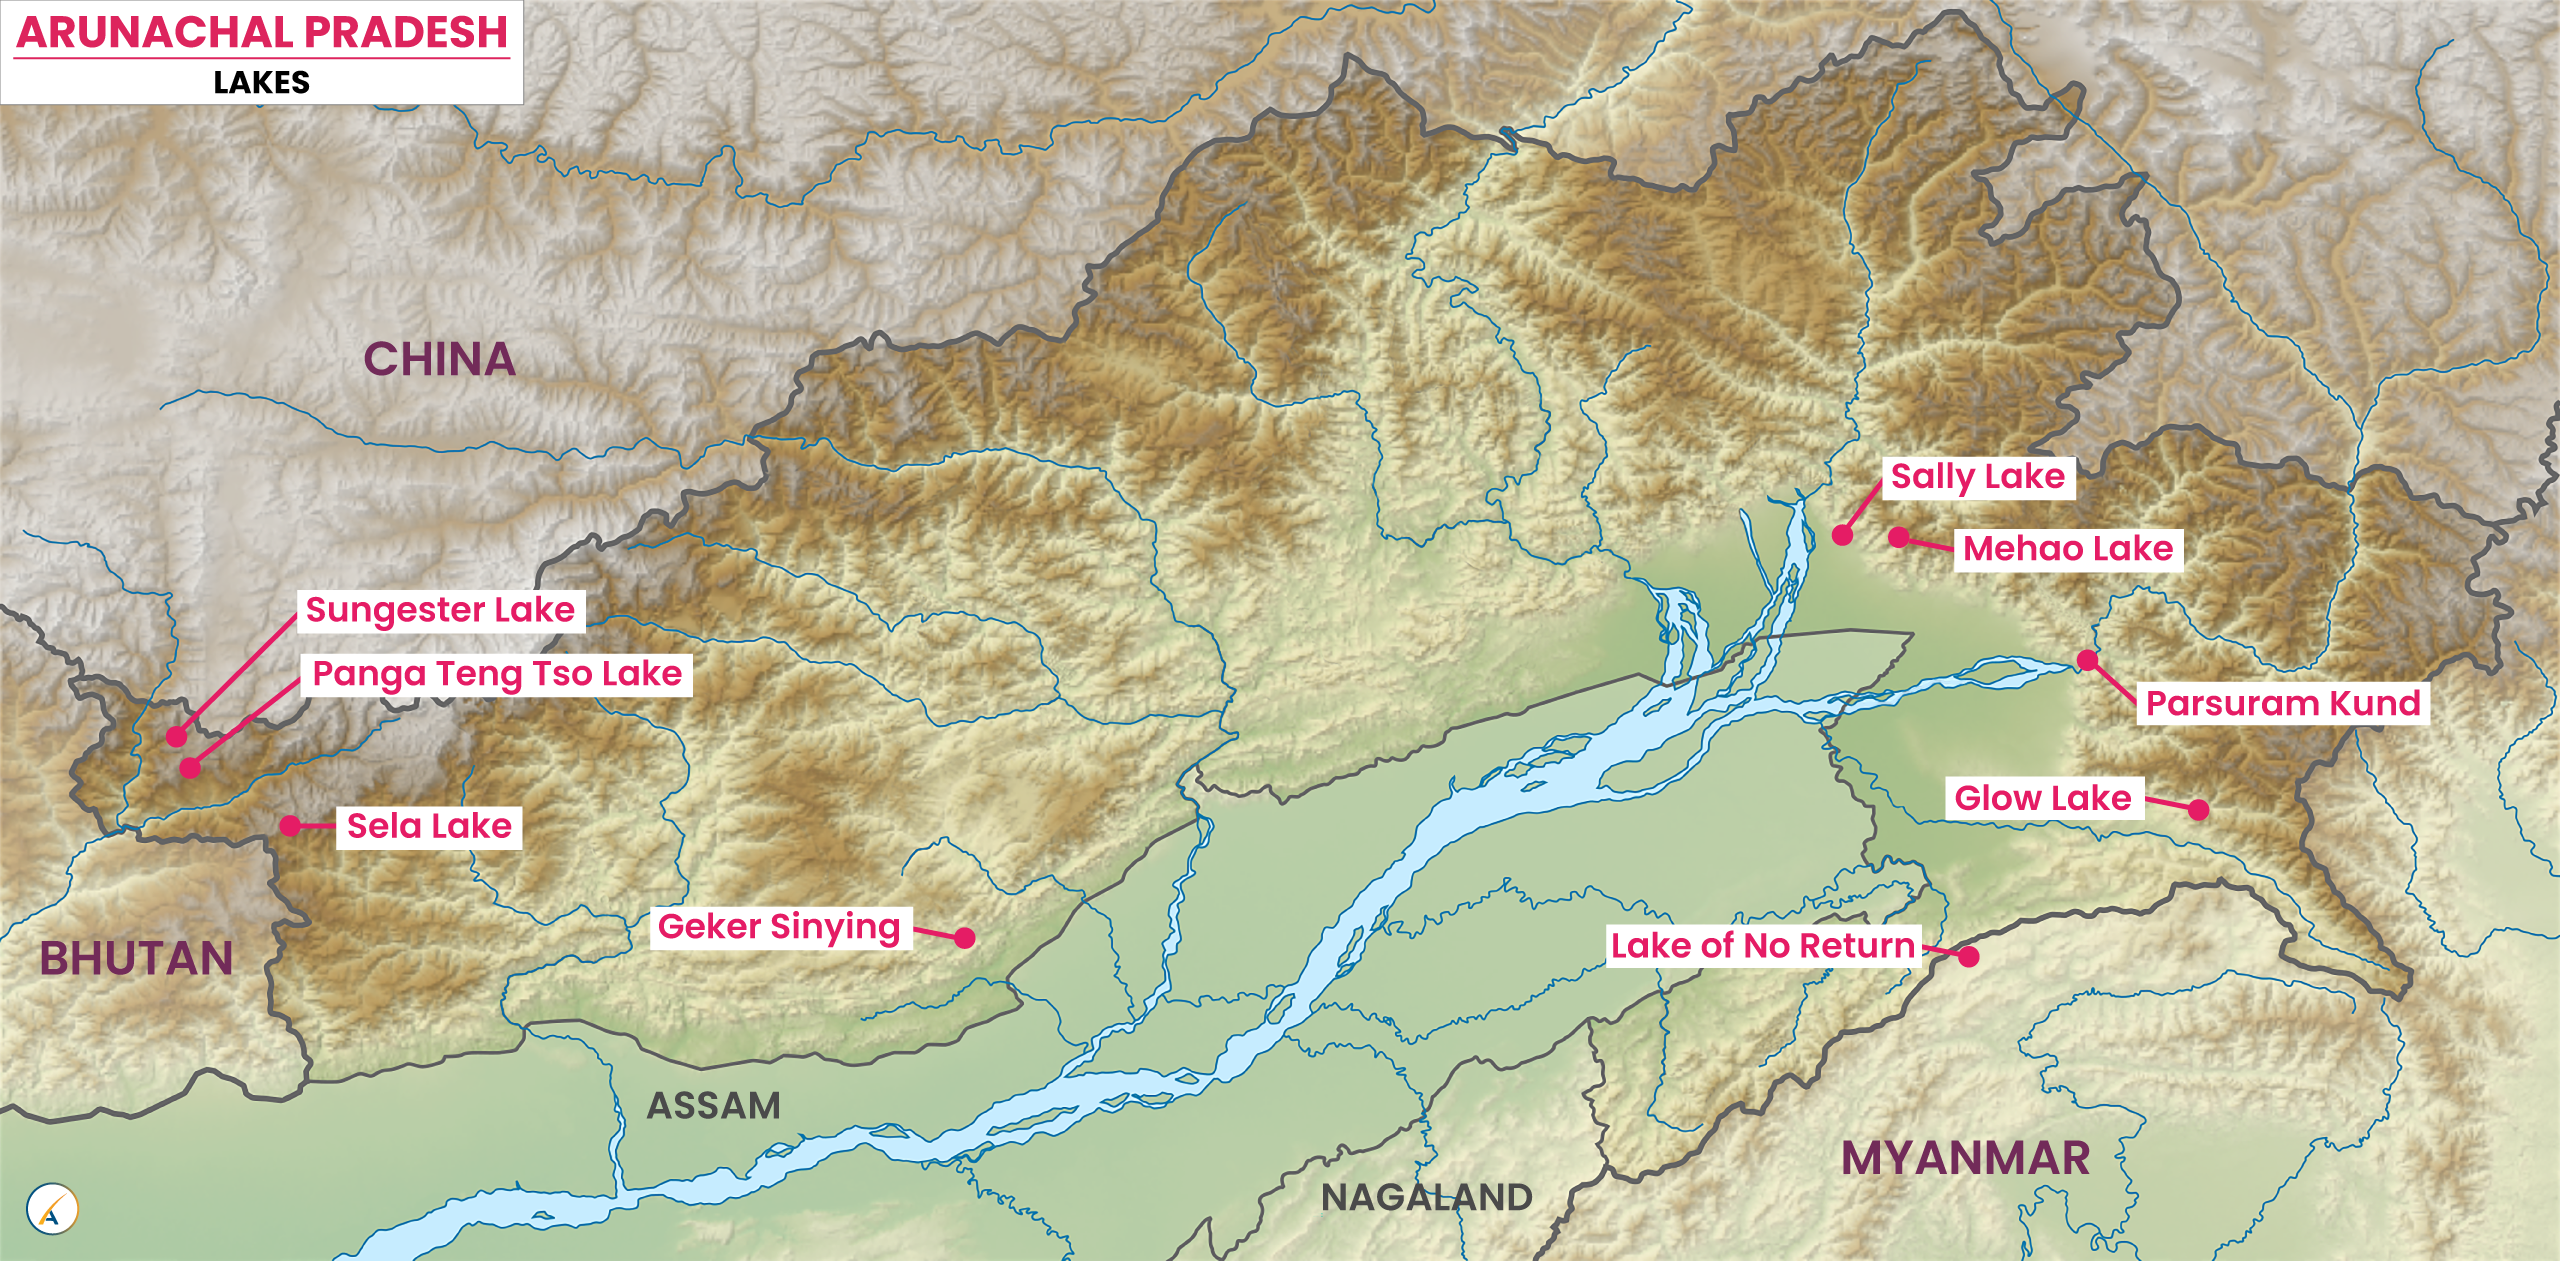 Lakes in Arunachal Pradesh (Map)